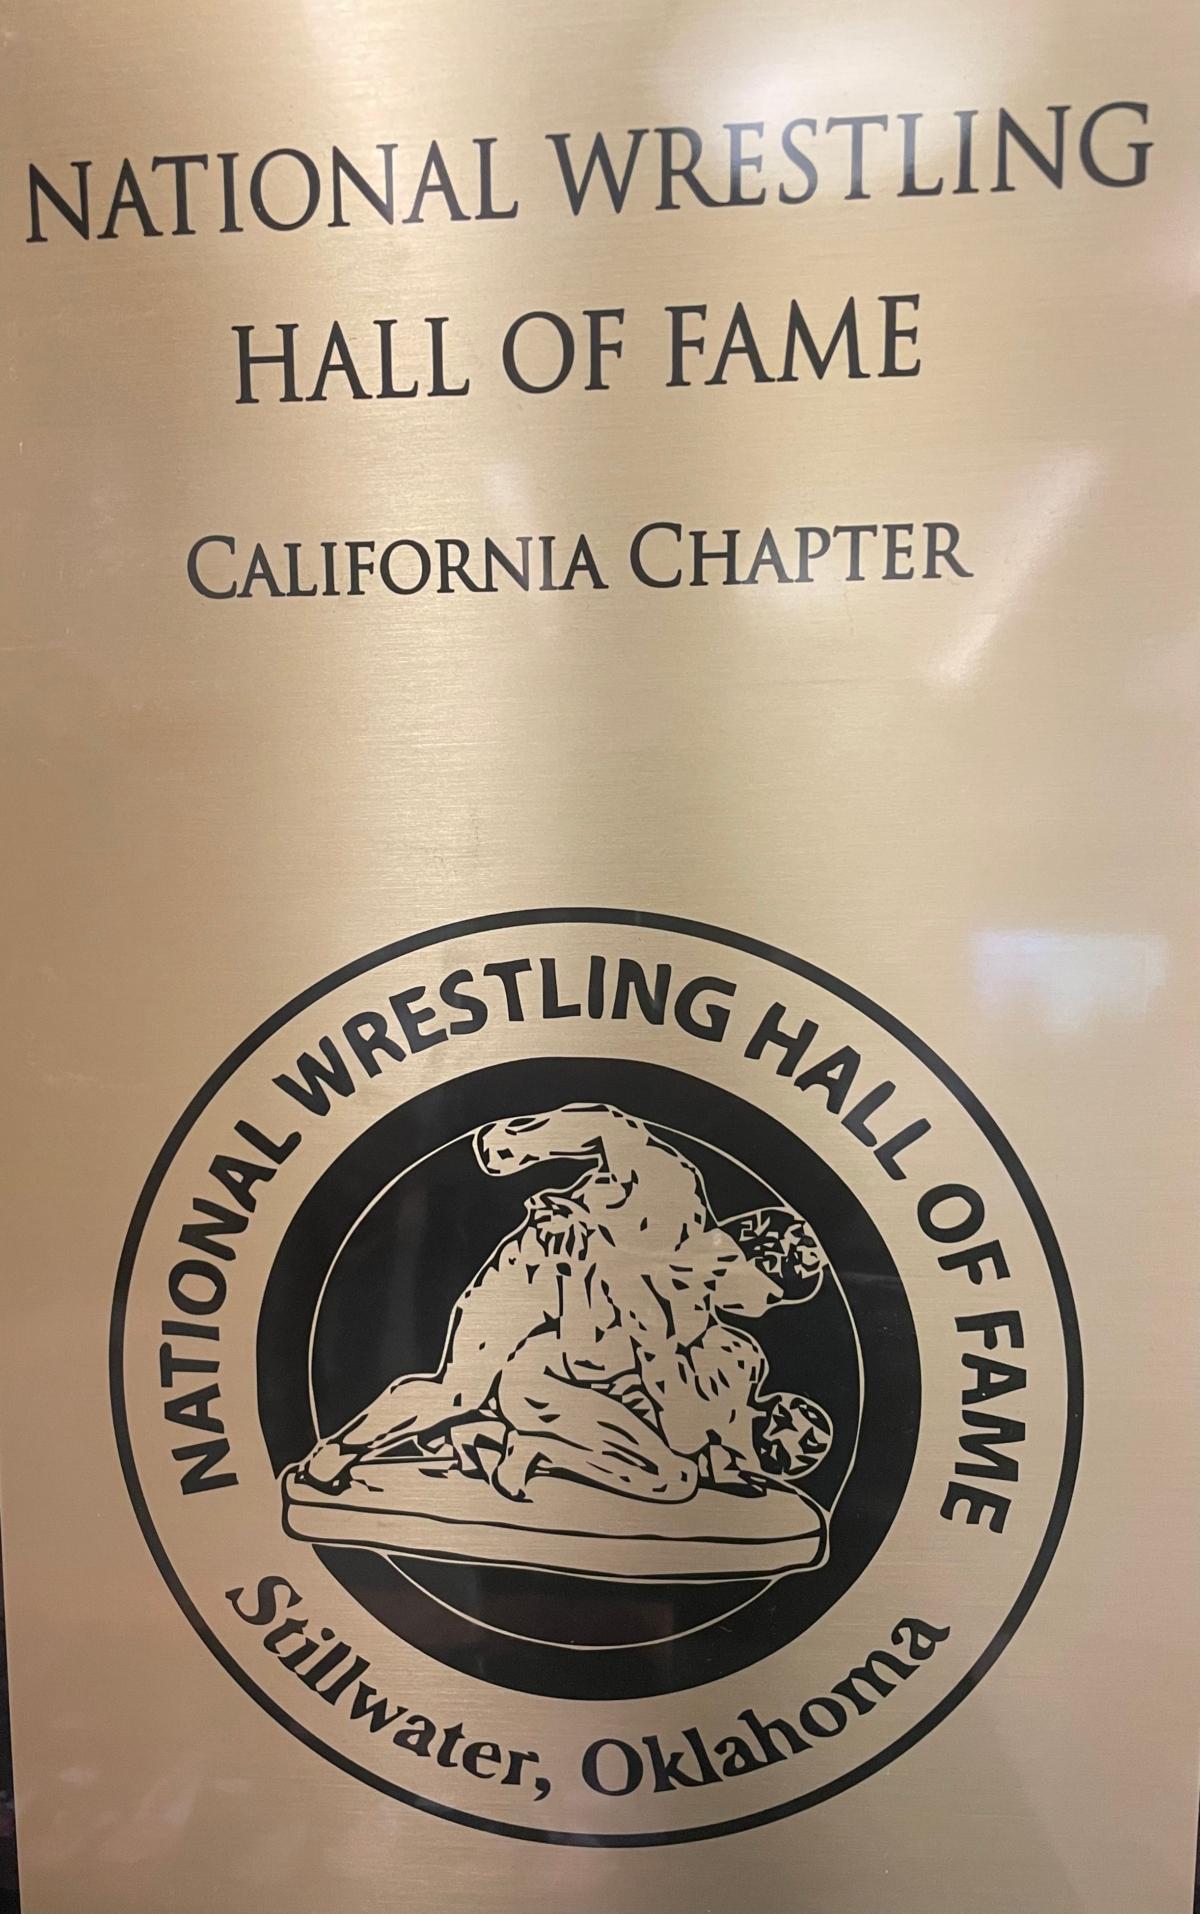 National Wrestling Hall of Fame ceremony at the Laguna Hills Community Center in Laguna Hills, Calif., on Aug. 20, 2023. (Courtesy of John Hamro)